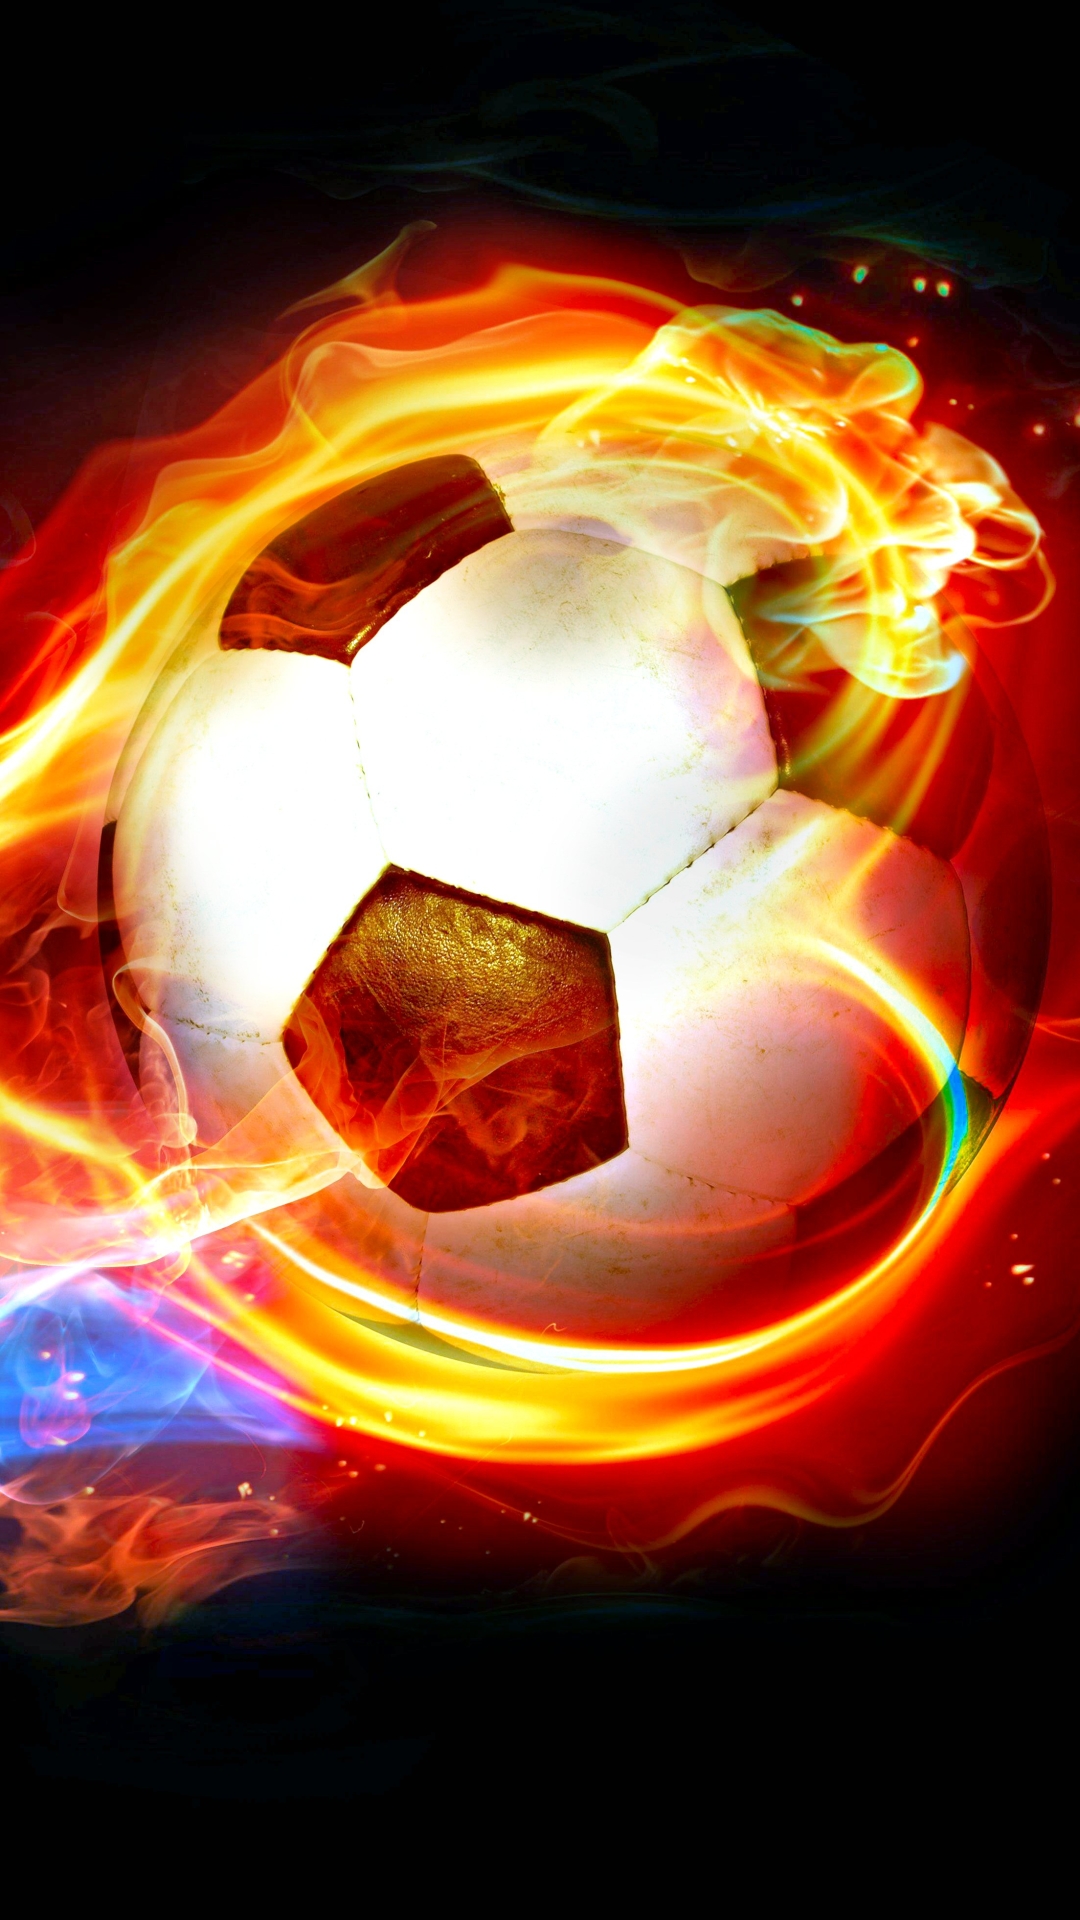 Descarga gratuita de fondo de pantalla para móvil de Fútbol, Fuego, Llama, Bola, Pelota, Vistoso, Deporte.